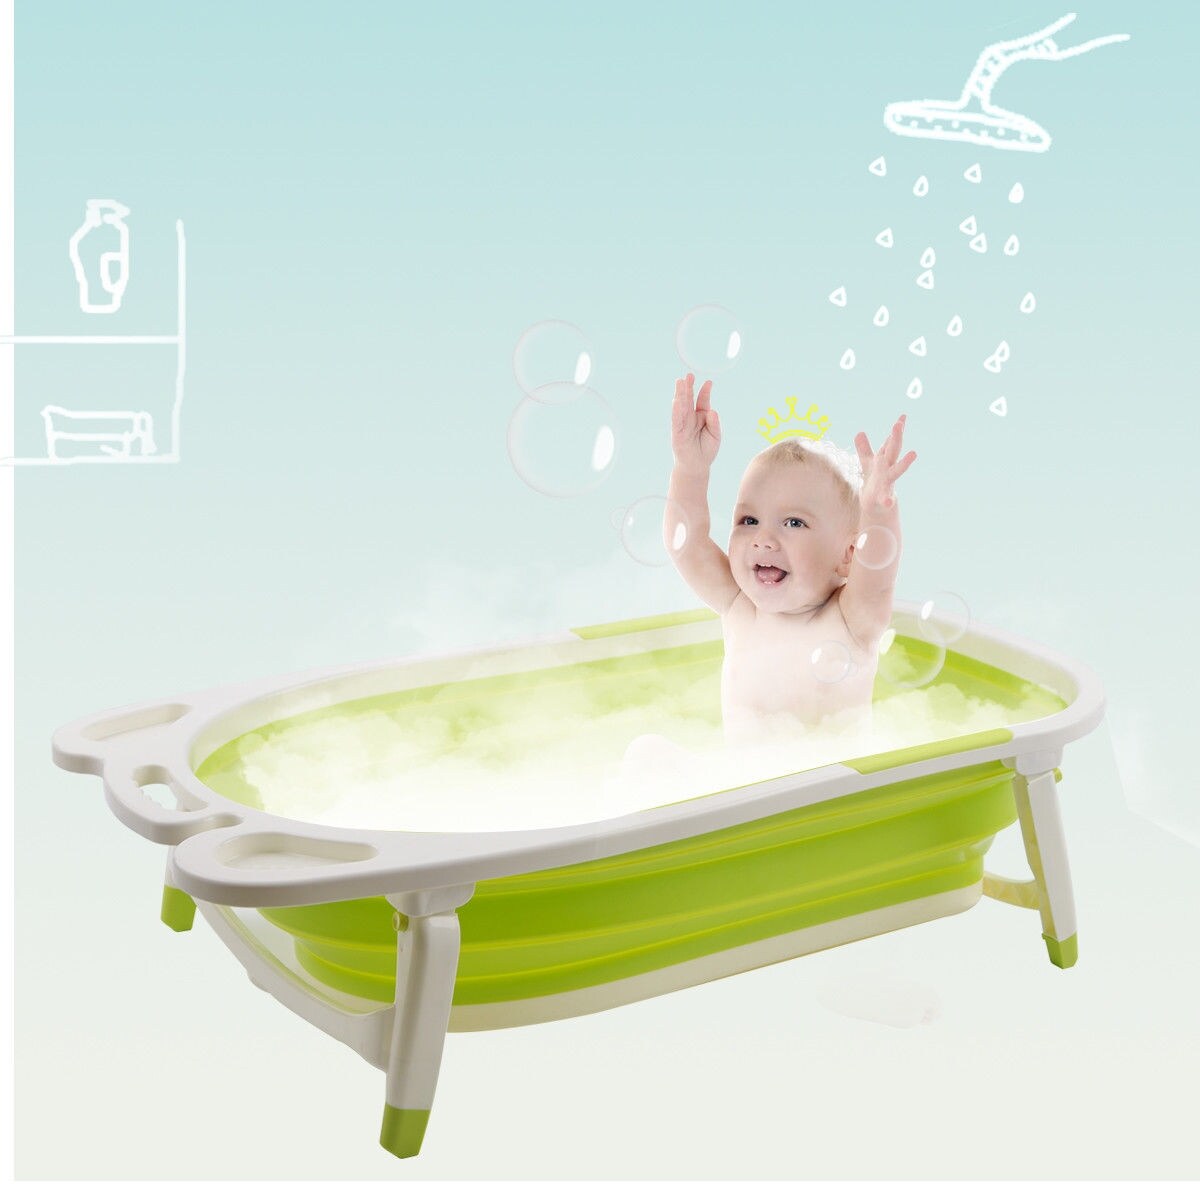 newborn folding bathtub